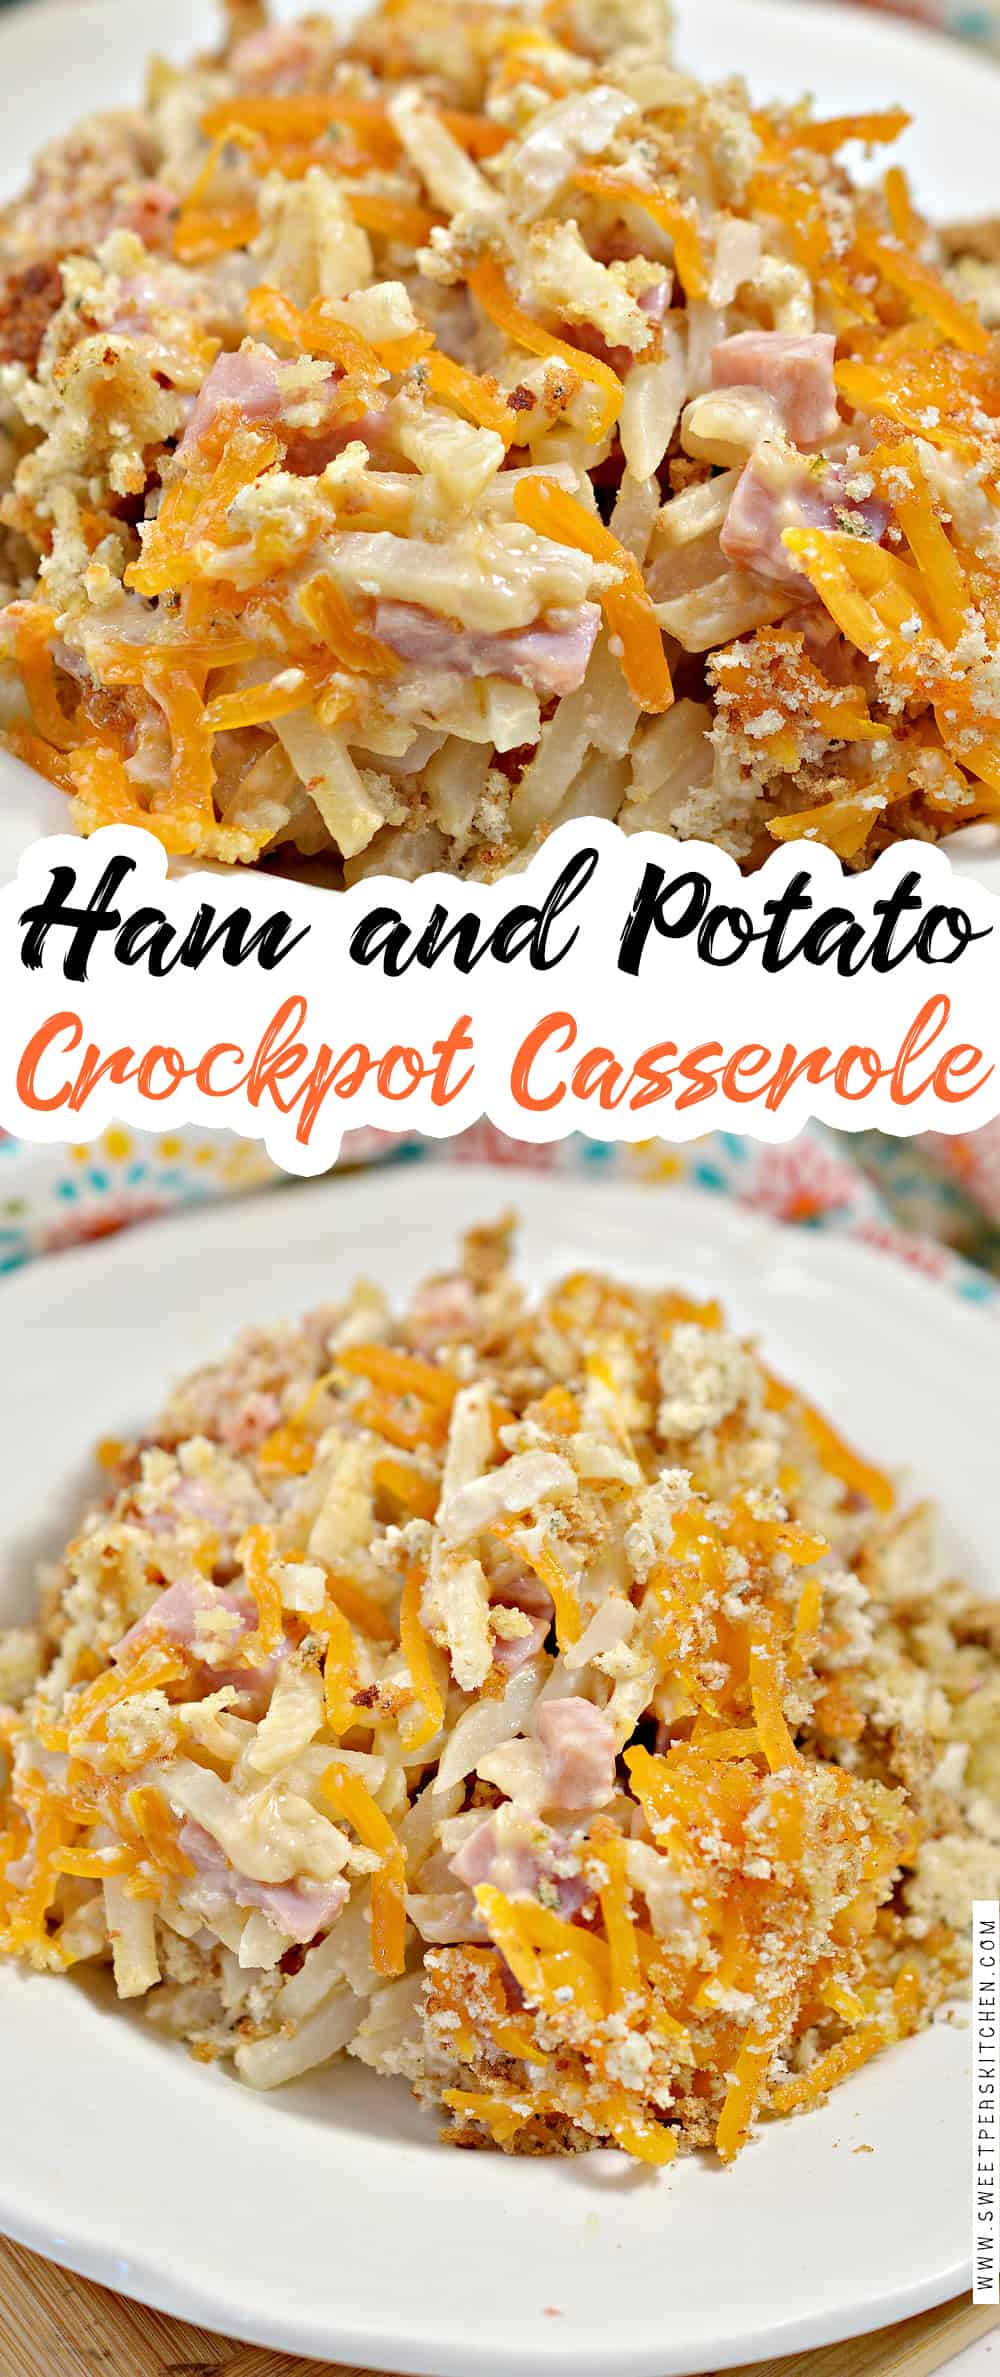 Crockpot Ham and Potato Casserole on Pinterest